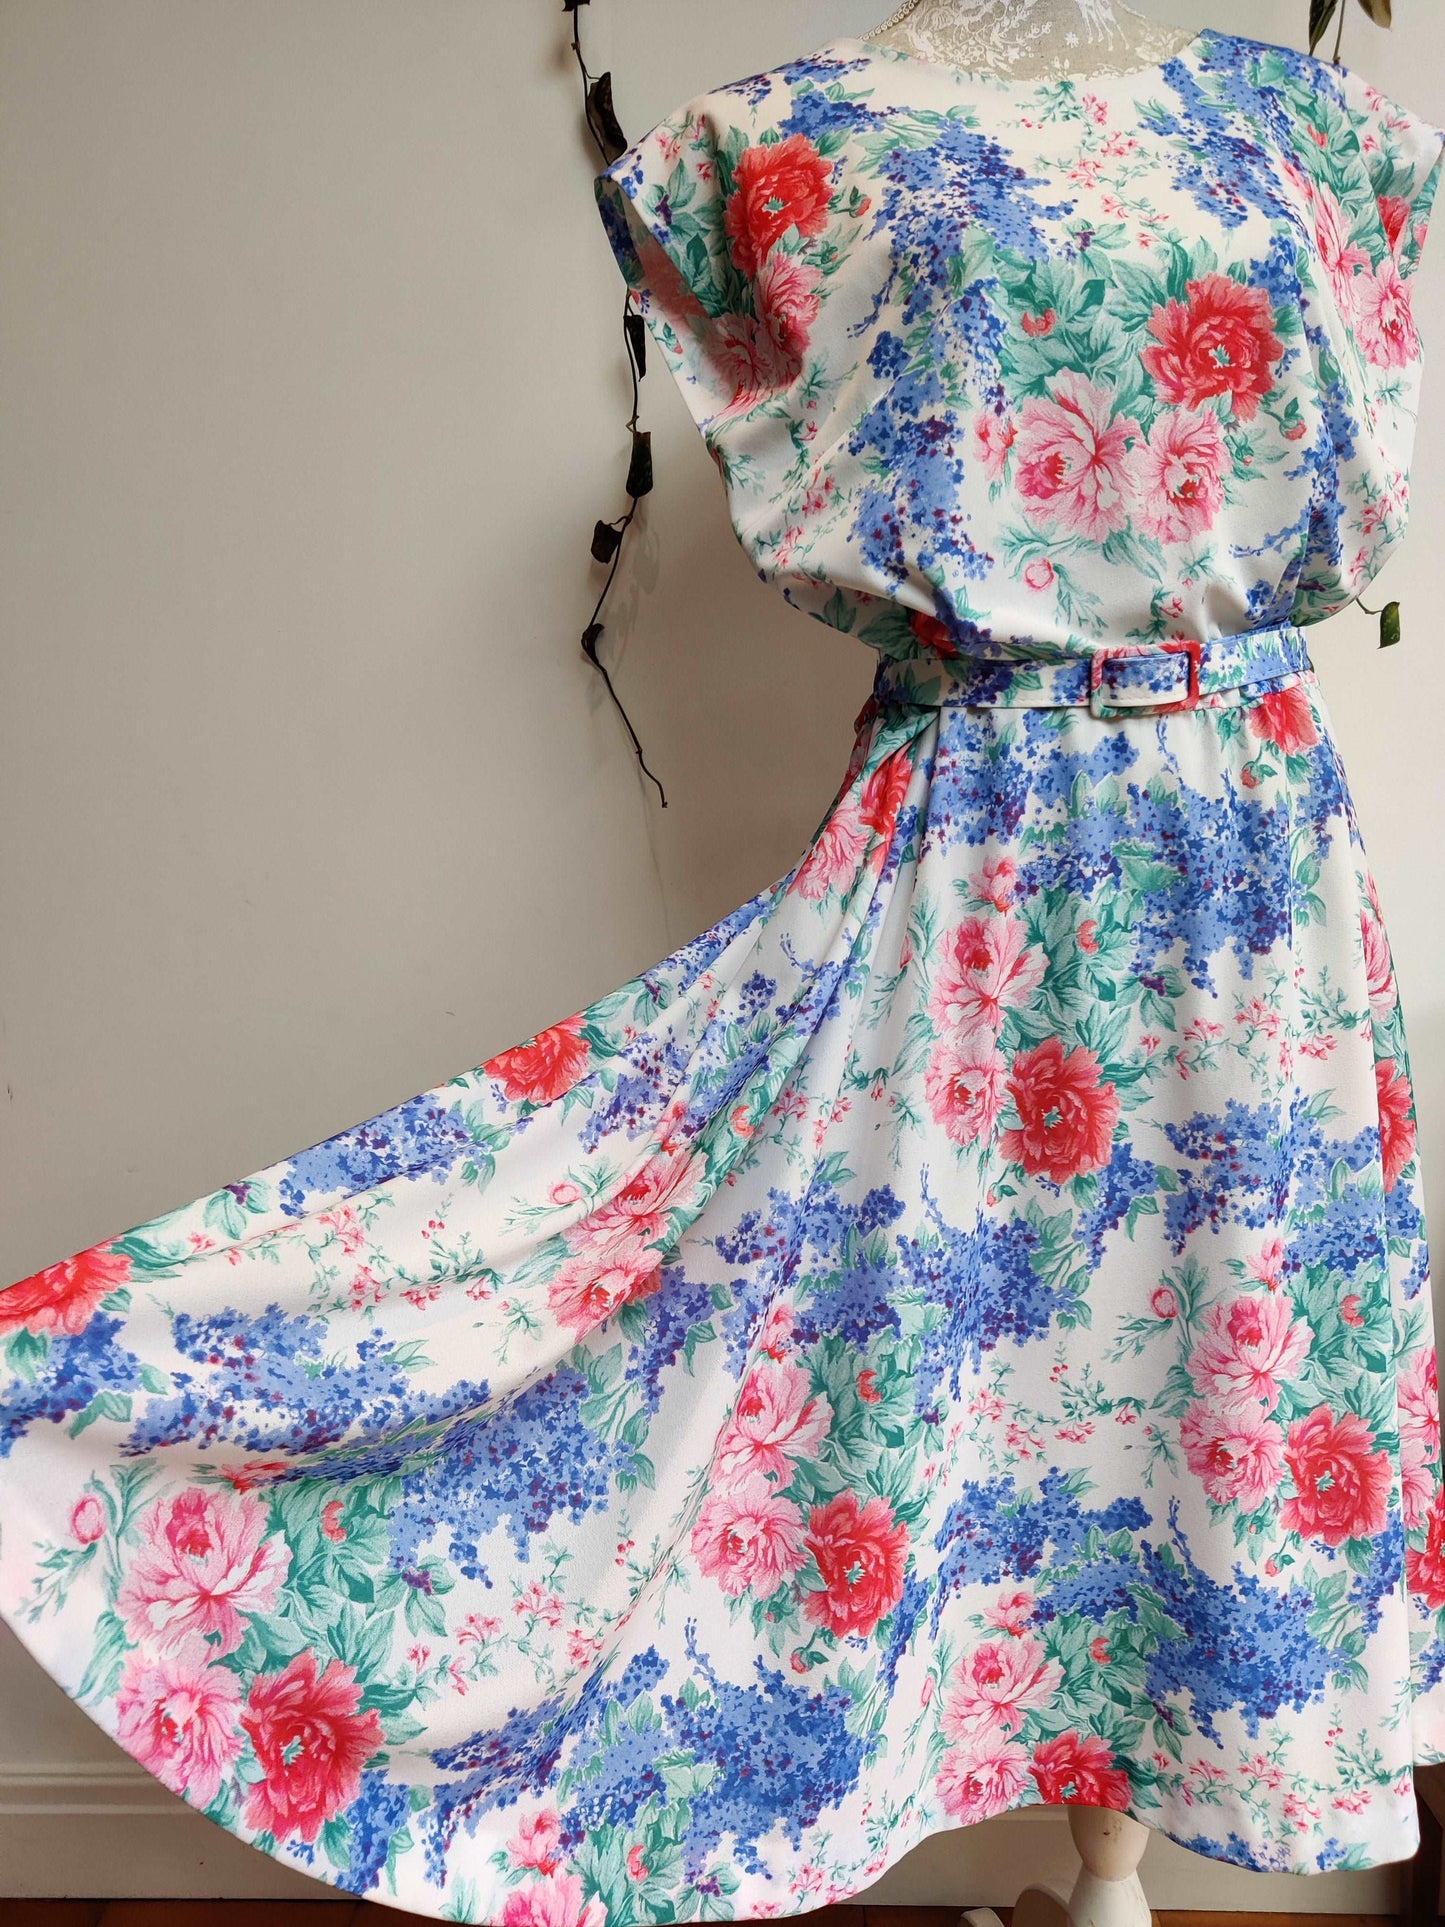 Incredible vintage floral dress size 16